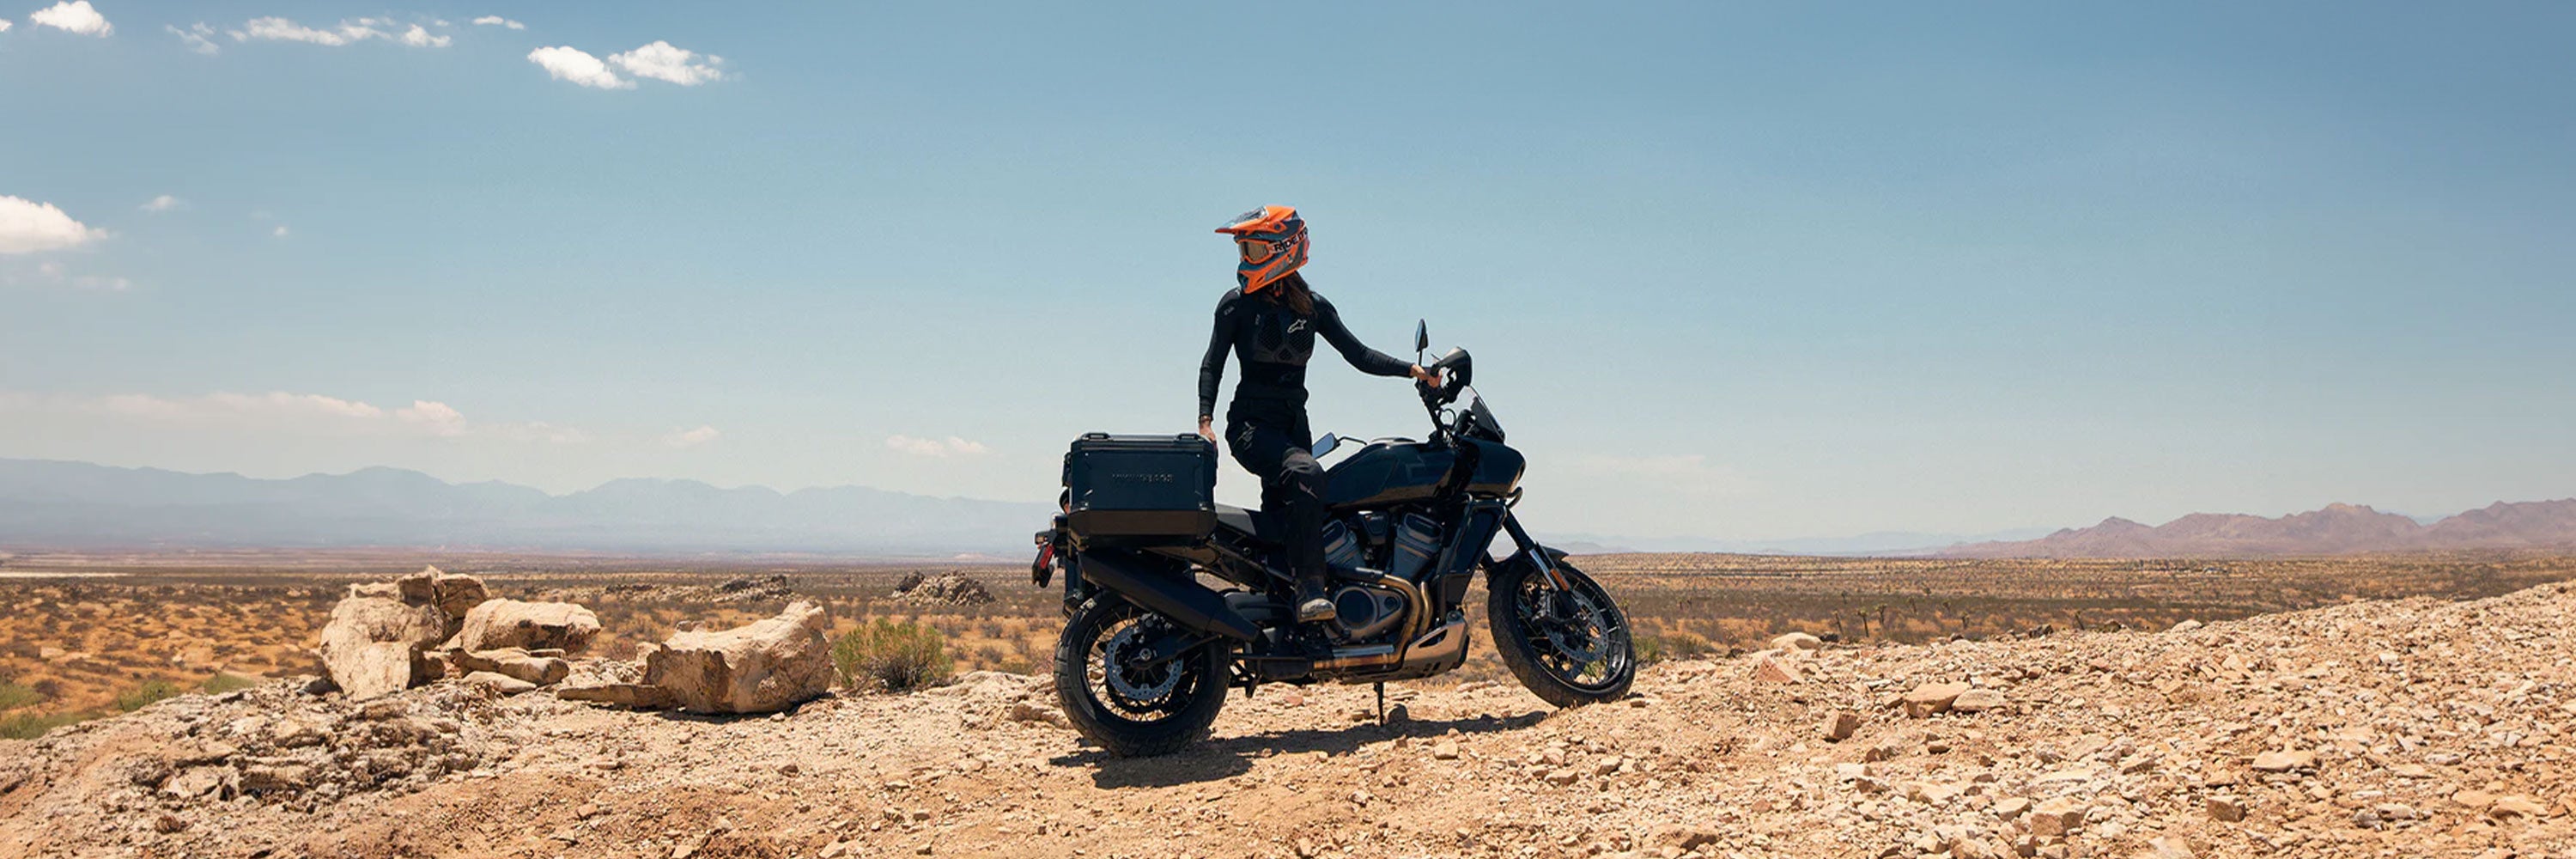 Harley Davidson Adventure Touring Saddlebags & Luggage Bags